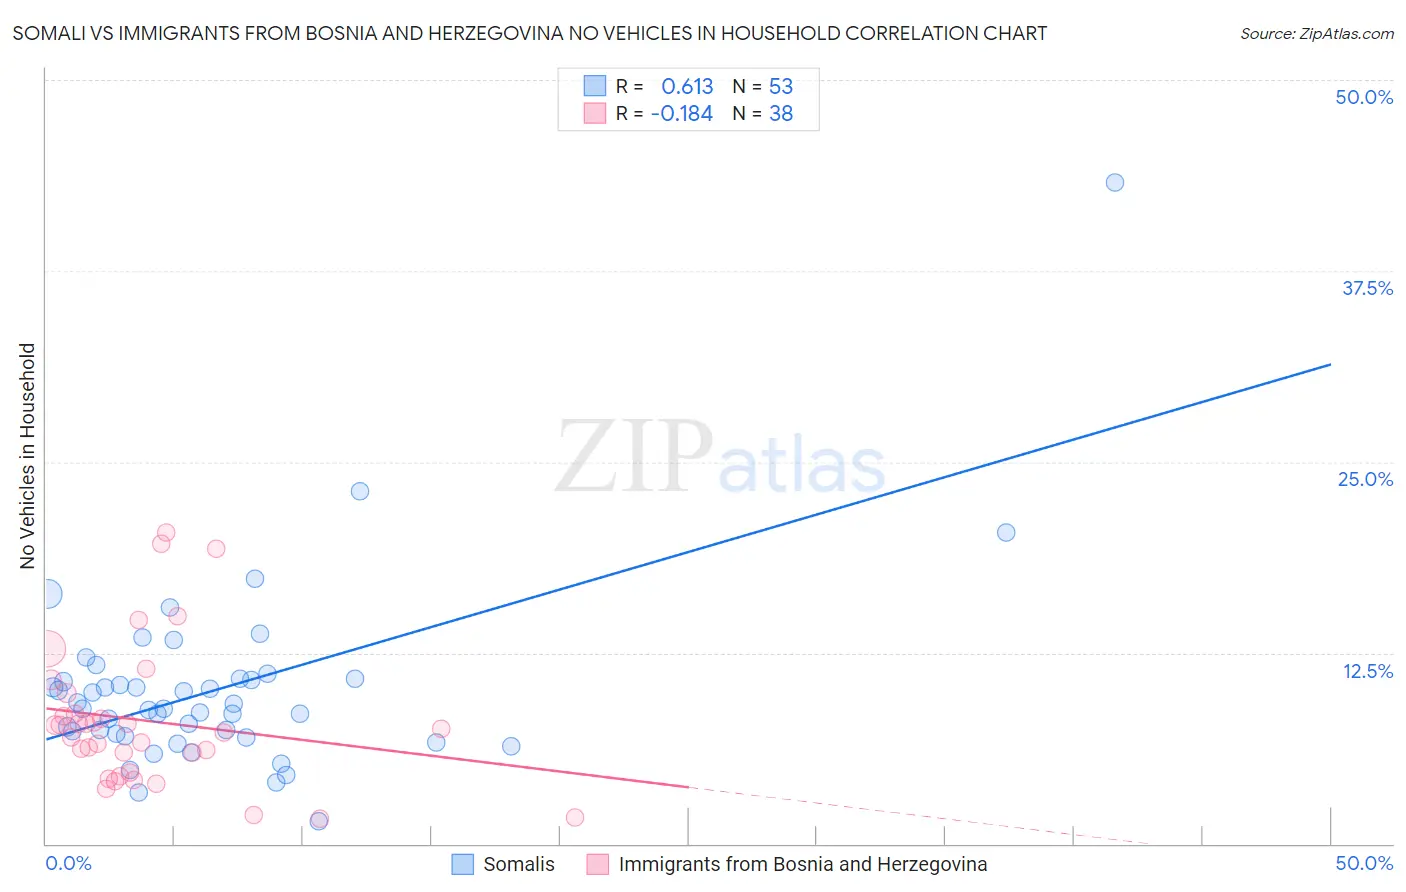 Somali vs Immigrants from Bosnia and Herzegovina No Vehicles in Household